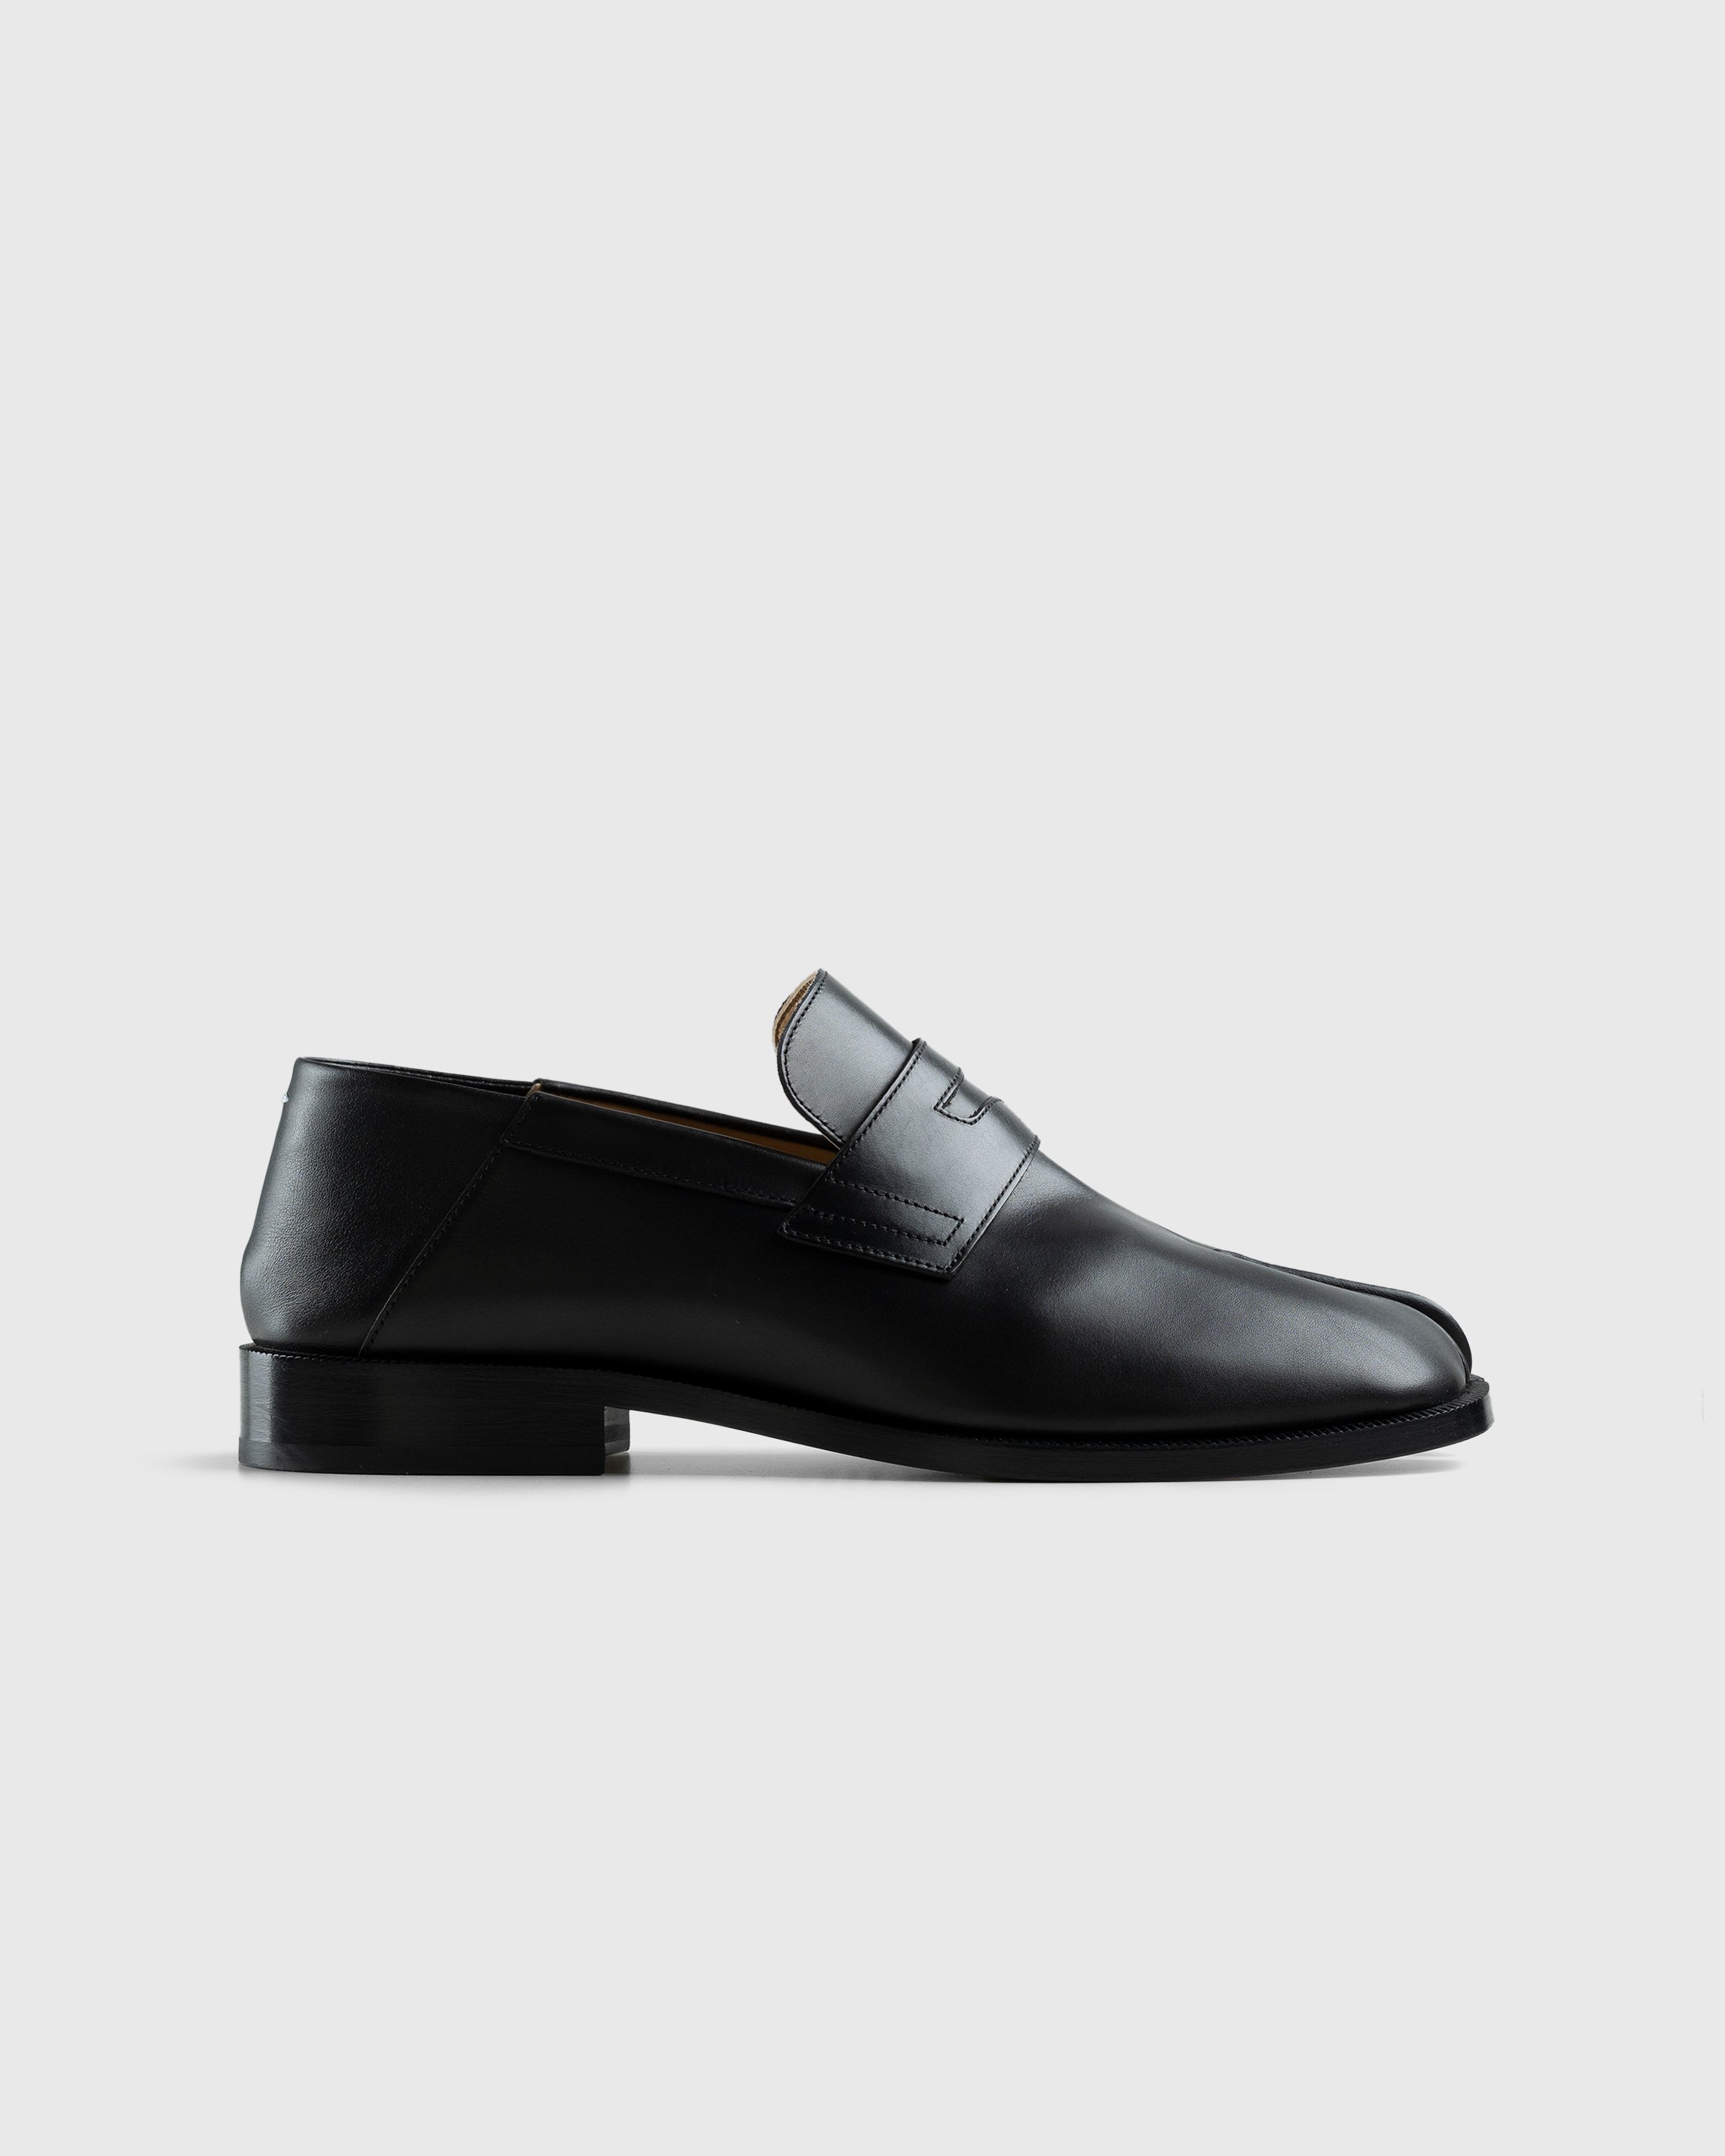 Maison Margiela - Tabi Loafer Babouche - Footwear - Black - Image 1